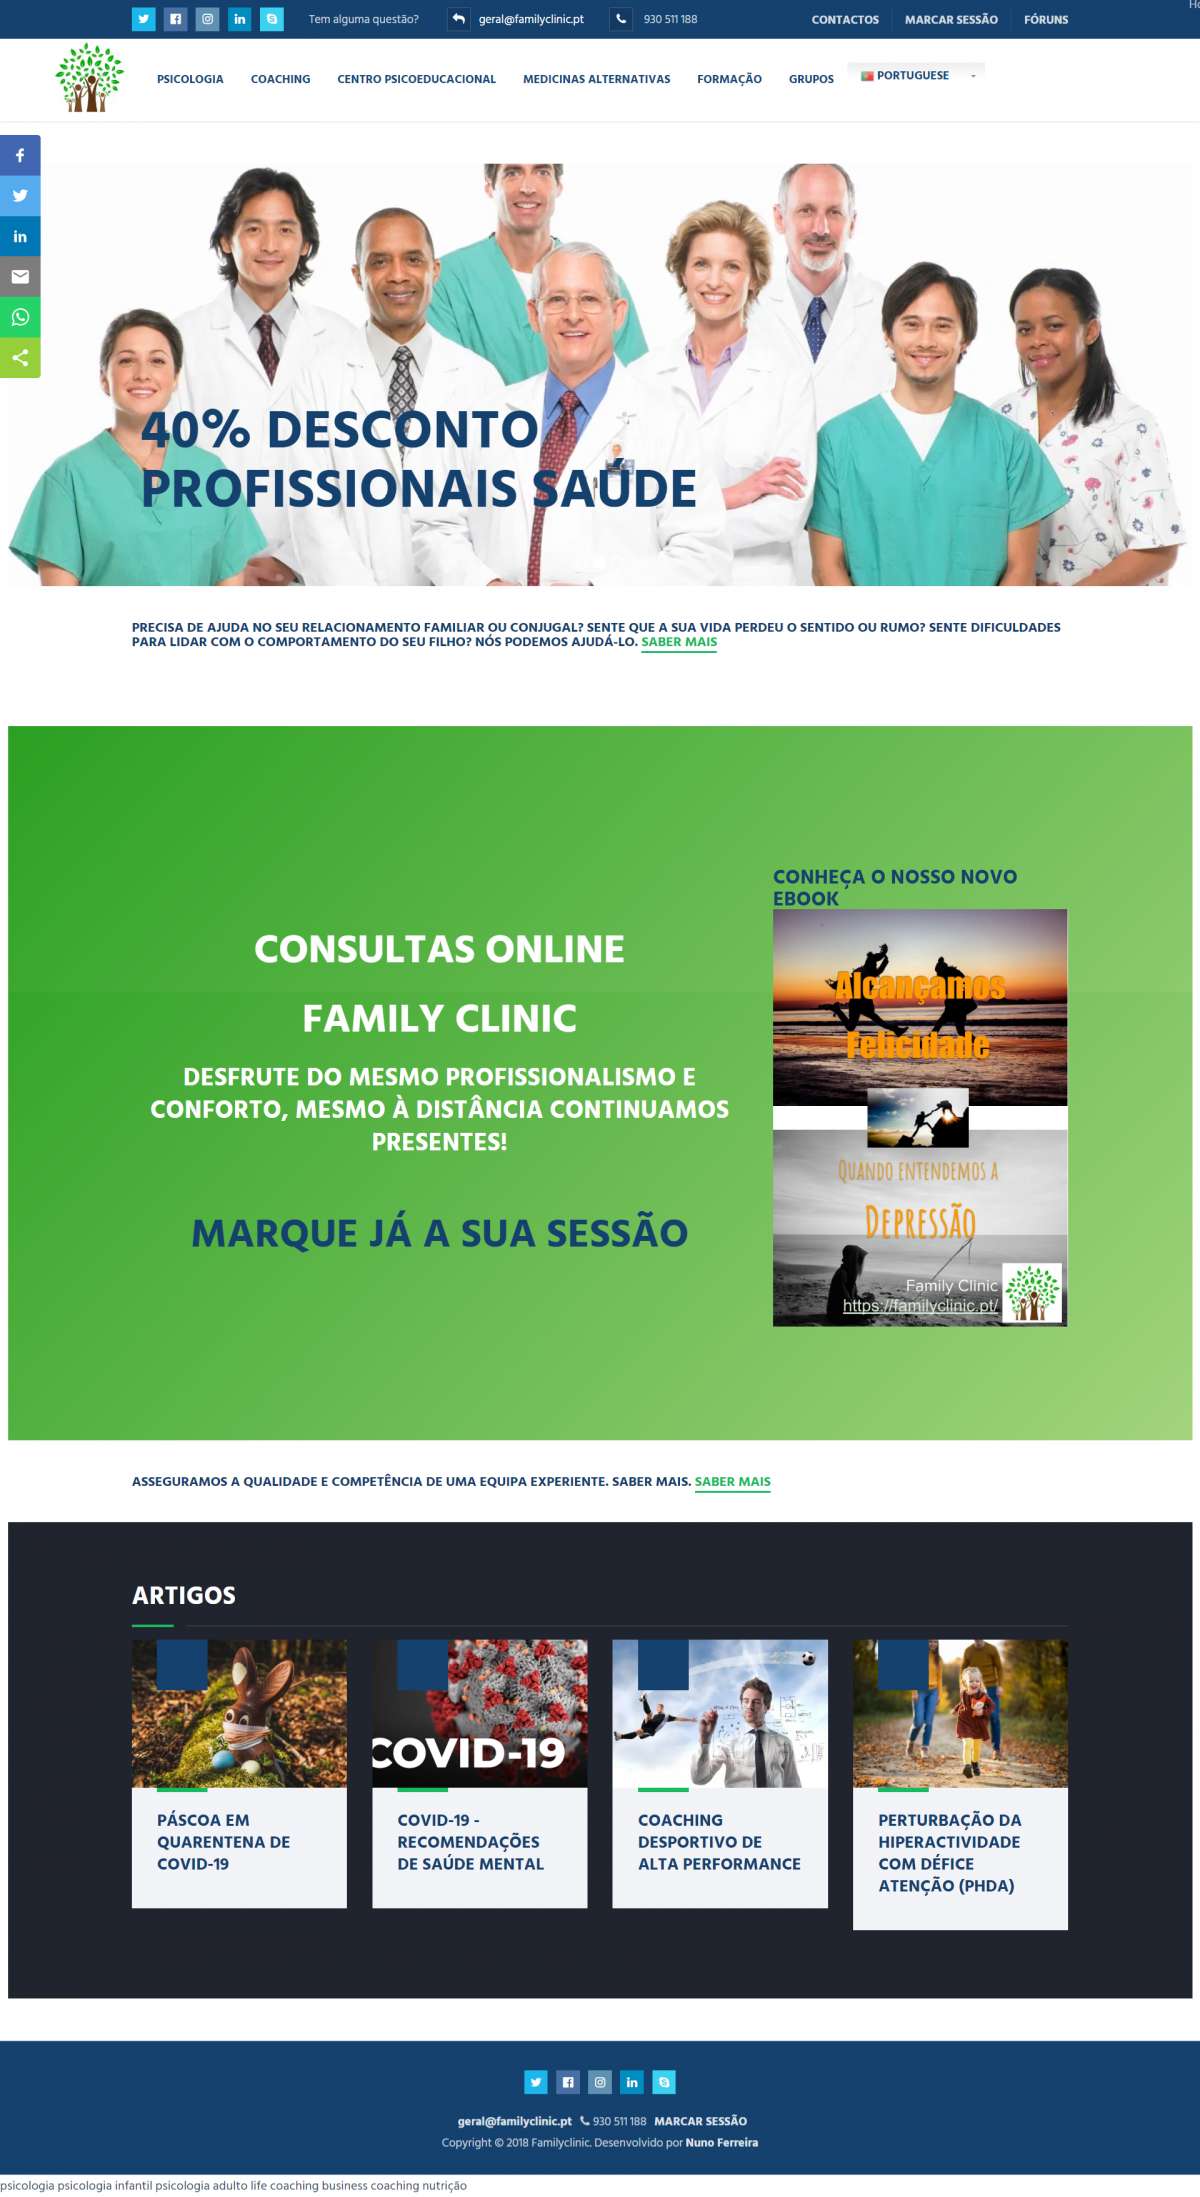 Nuno Ferreira - Matosinhos - Marketing Digital